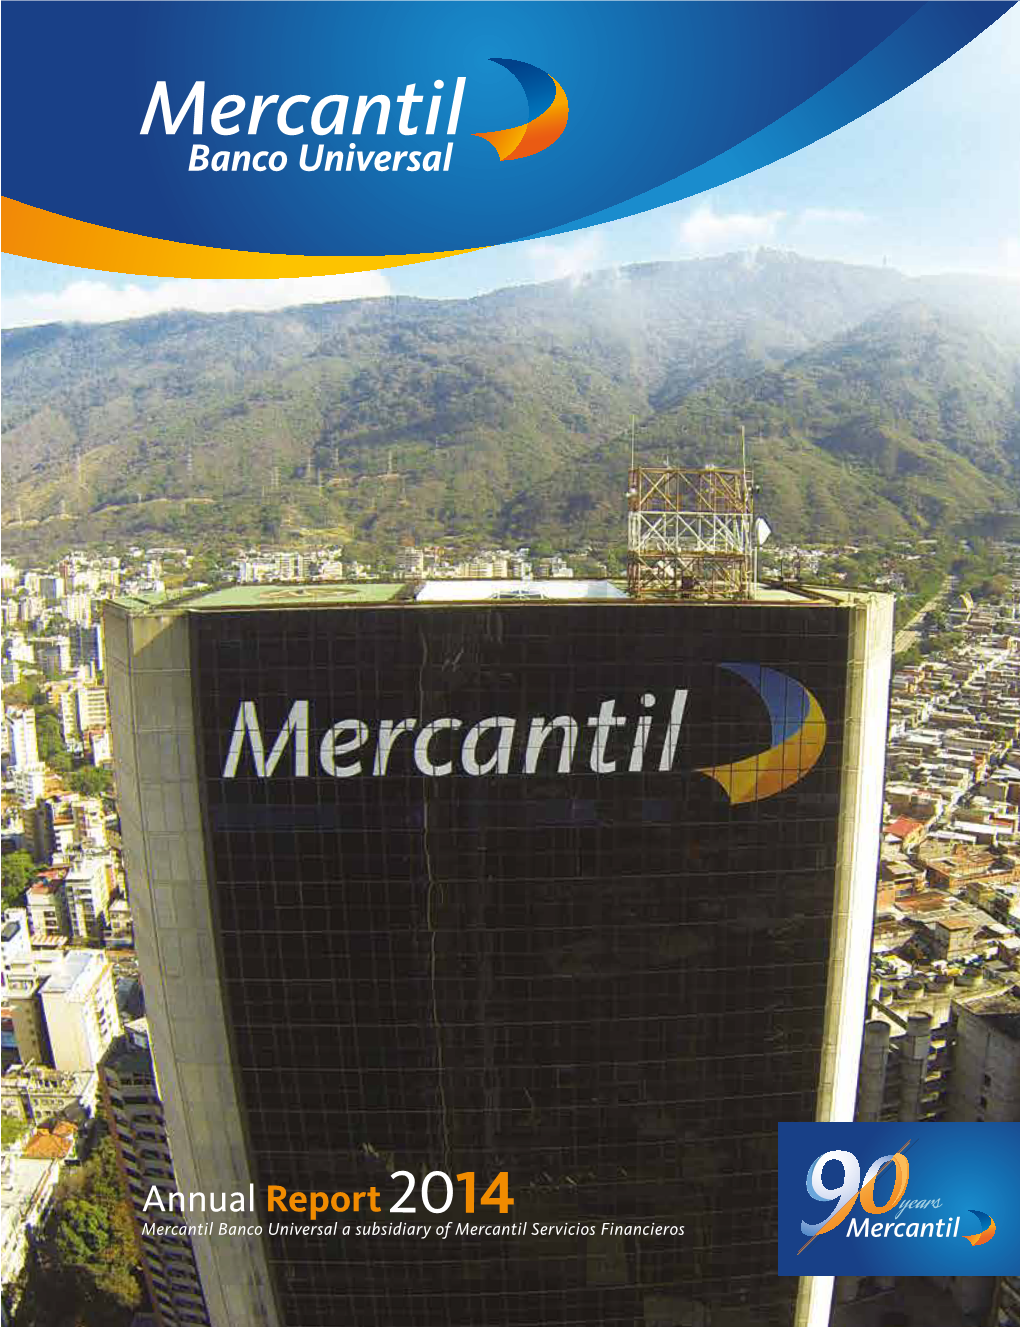 Mercantil Banco Universal Annual Report 2014